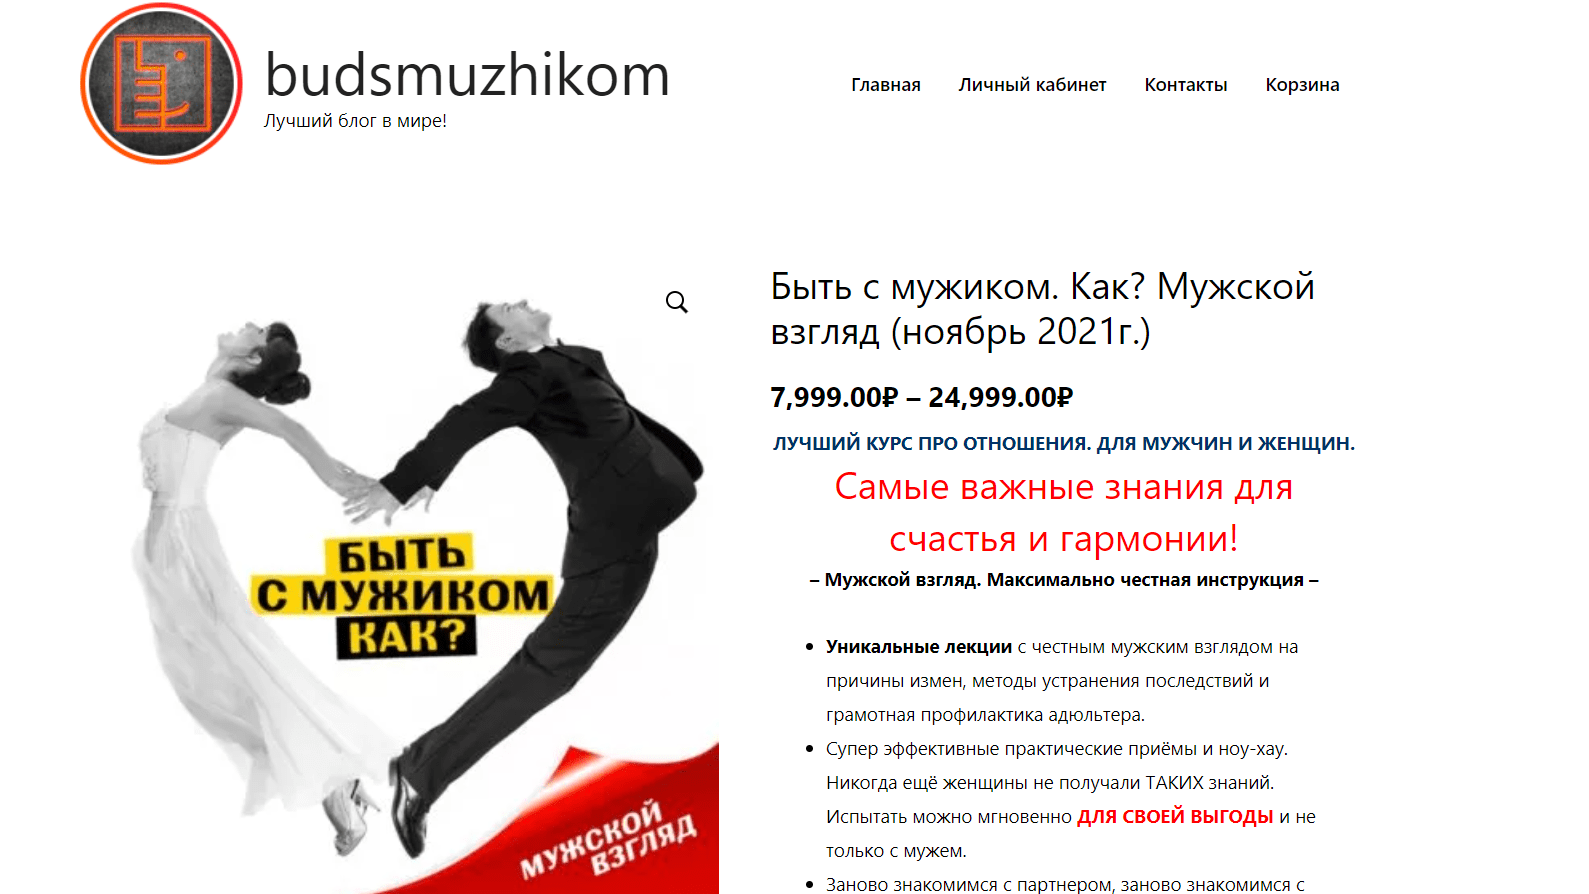 budsmuzhikom - отзывы